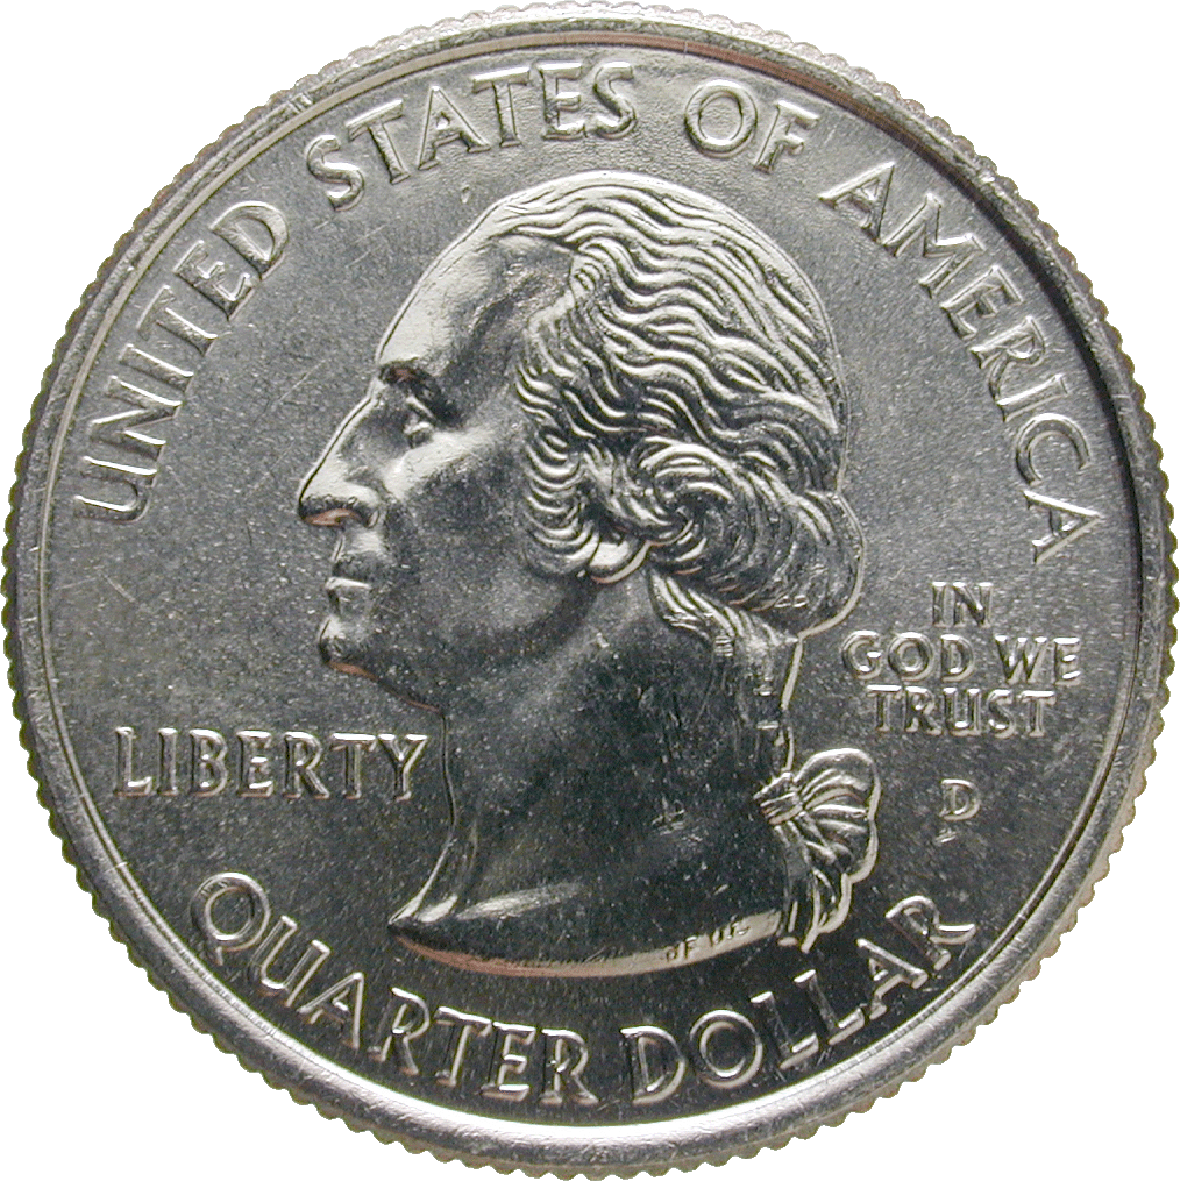 United States of America, Quarter Dollar 2006 (obverse)